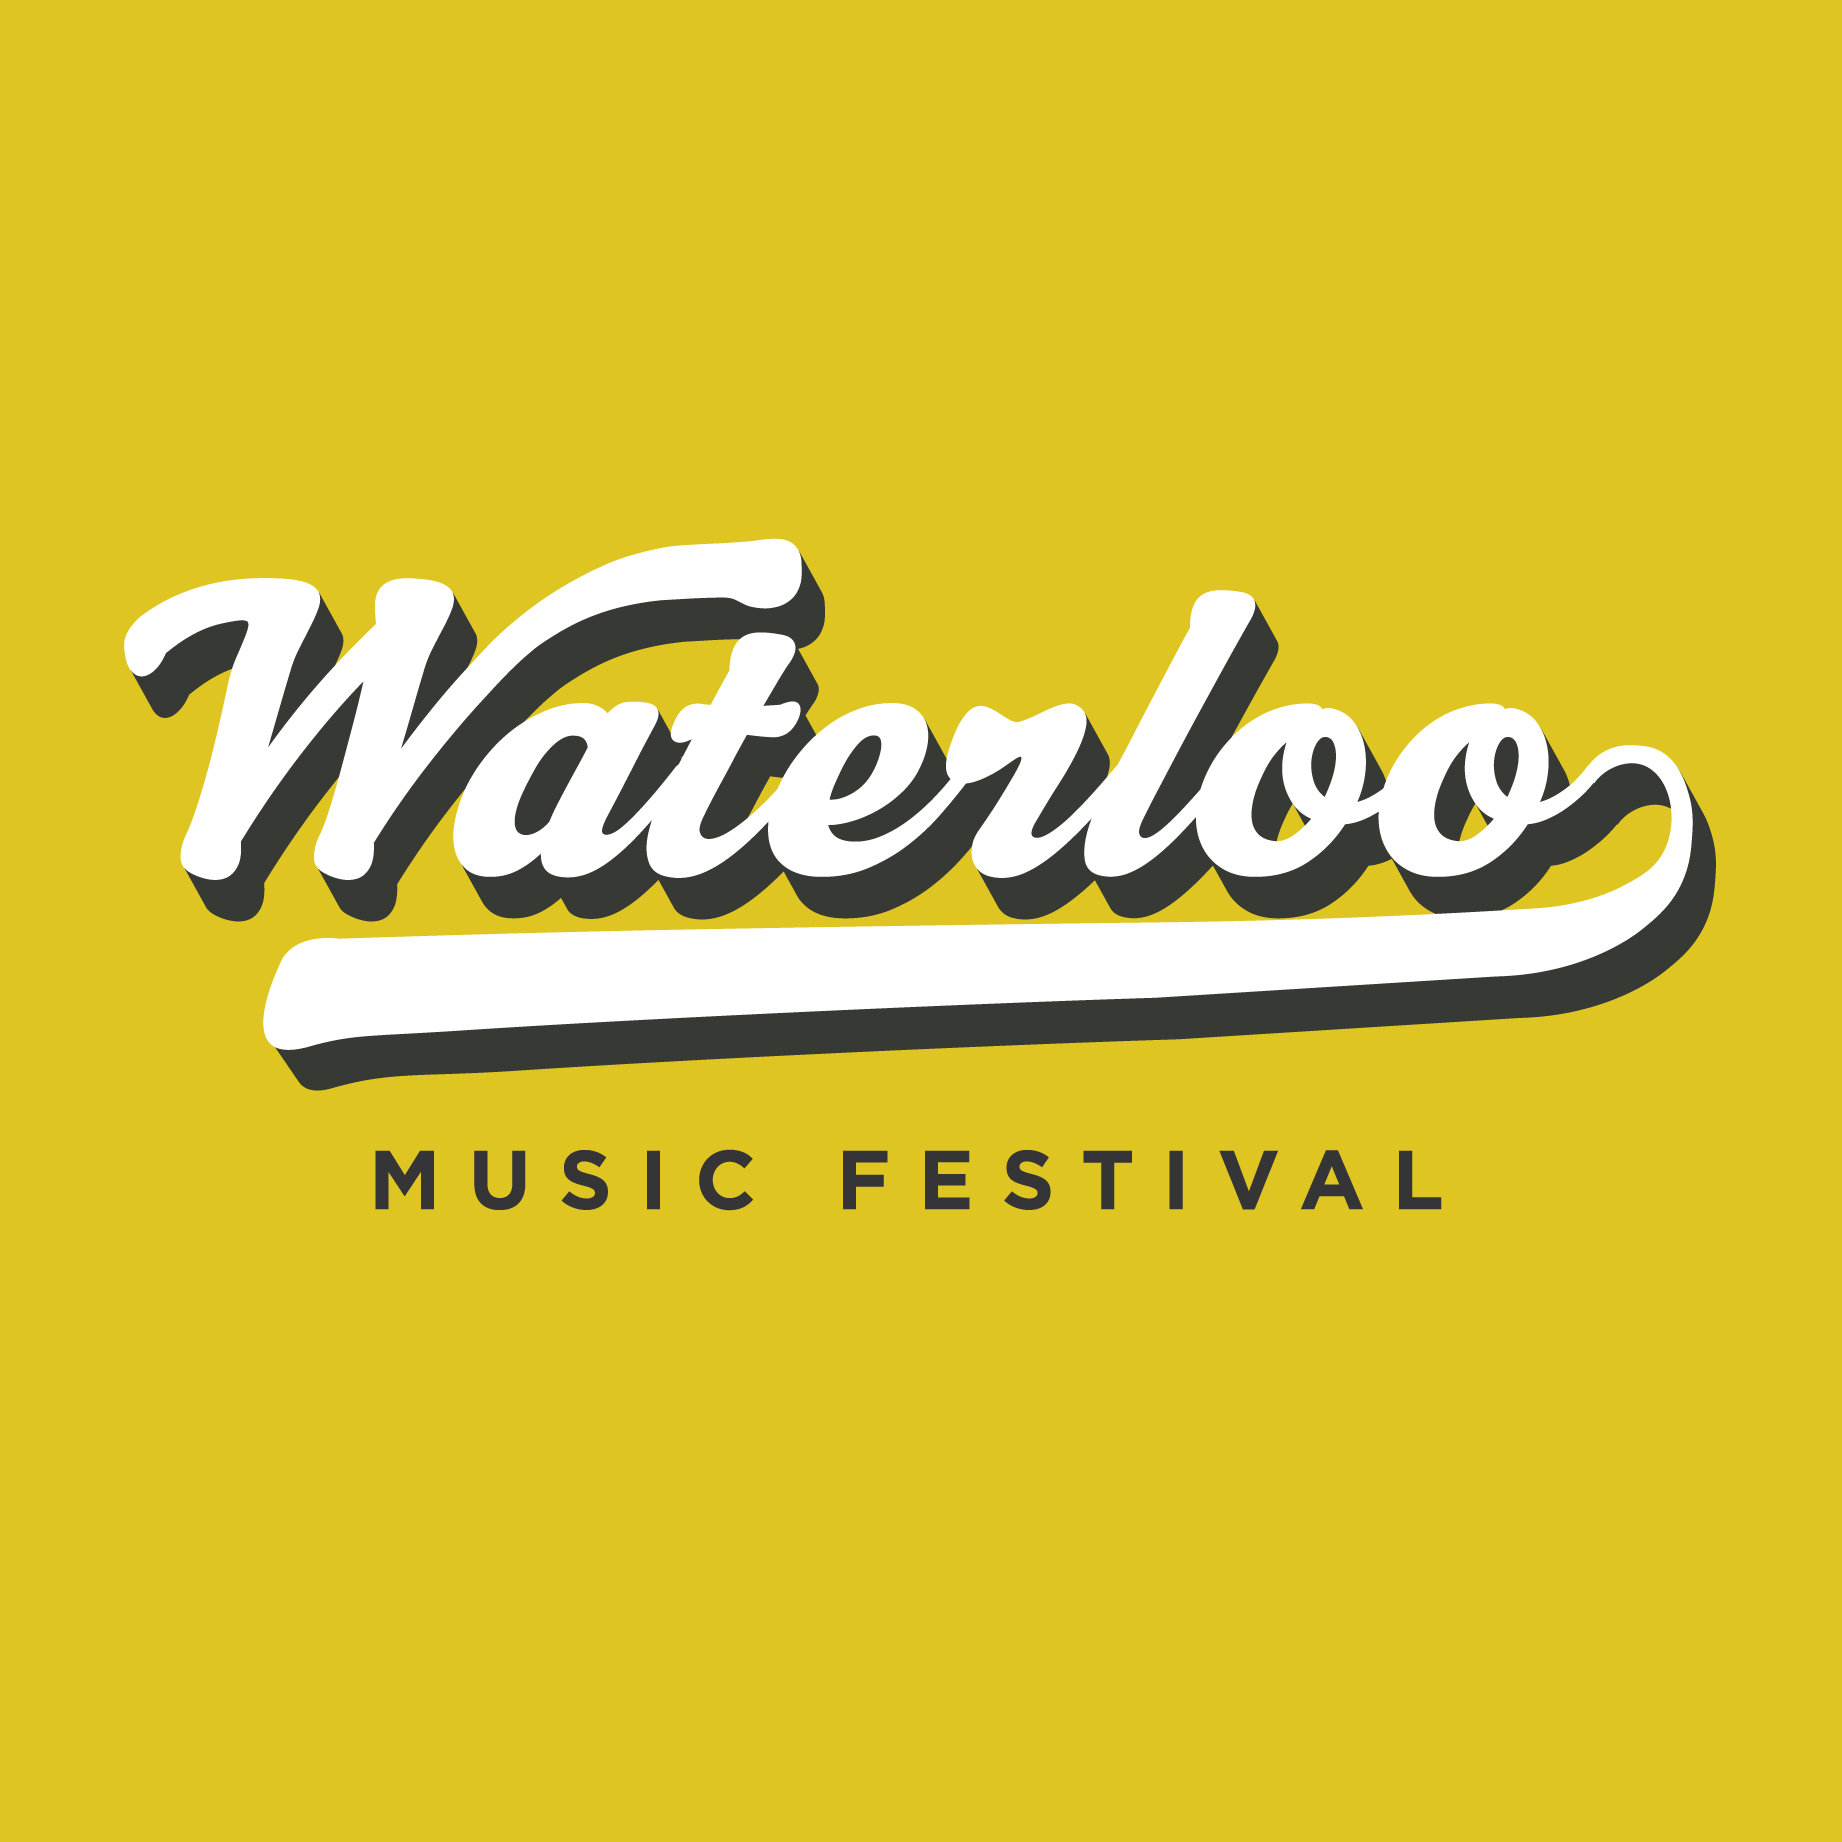 Waterloo Music Festival - Music Festivas in Texas 2020